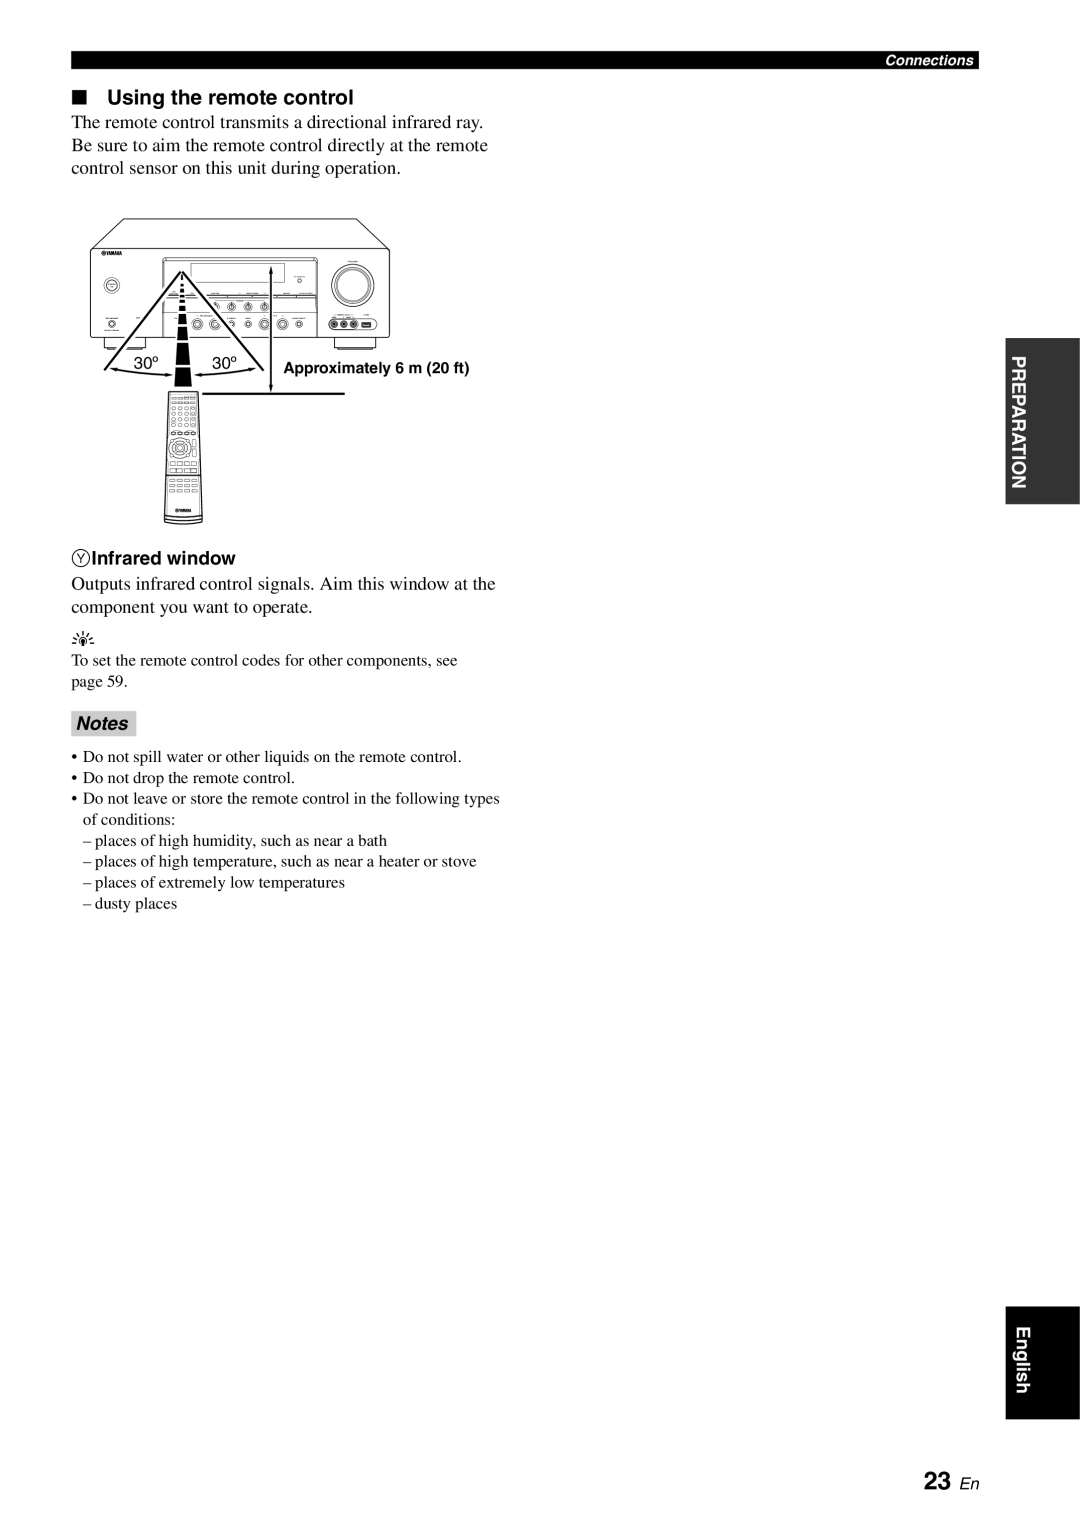 Yamaha RX-V561 owner manual 23 En, Using the remote control 